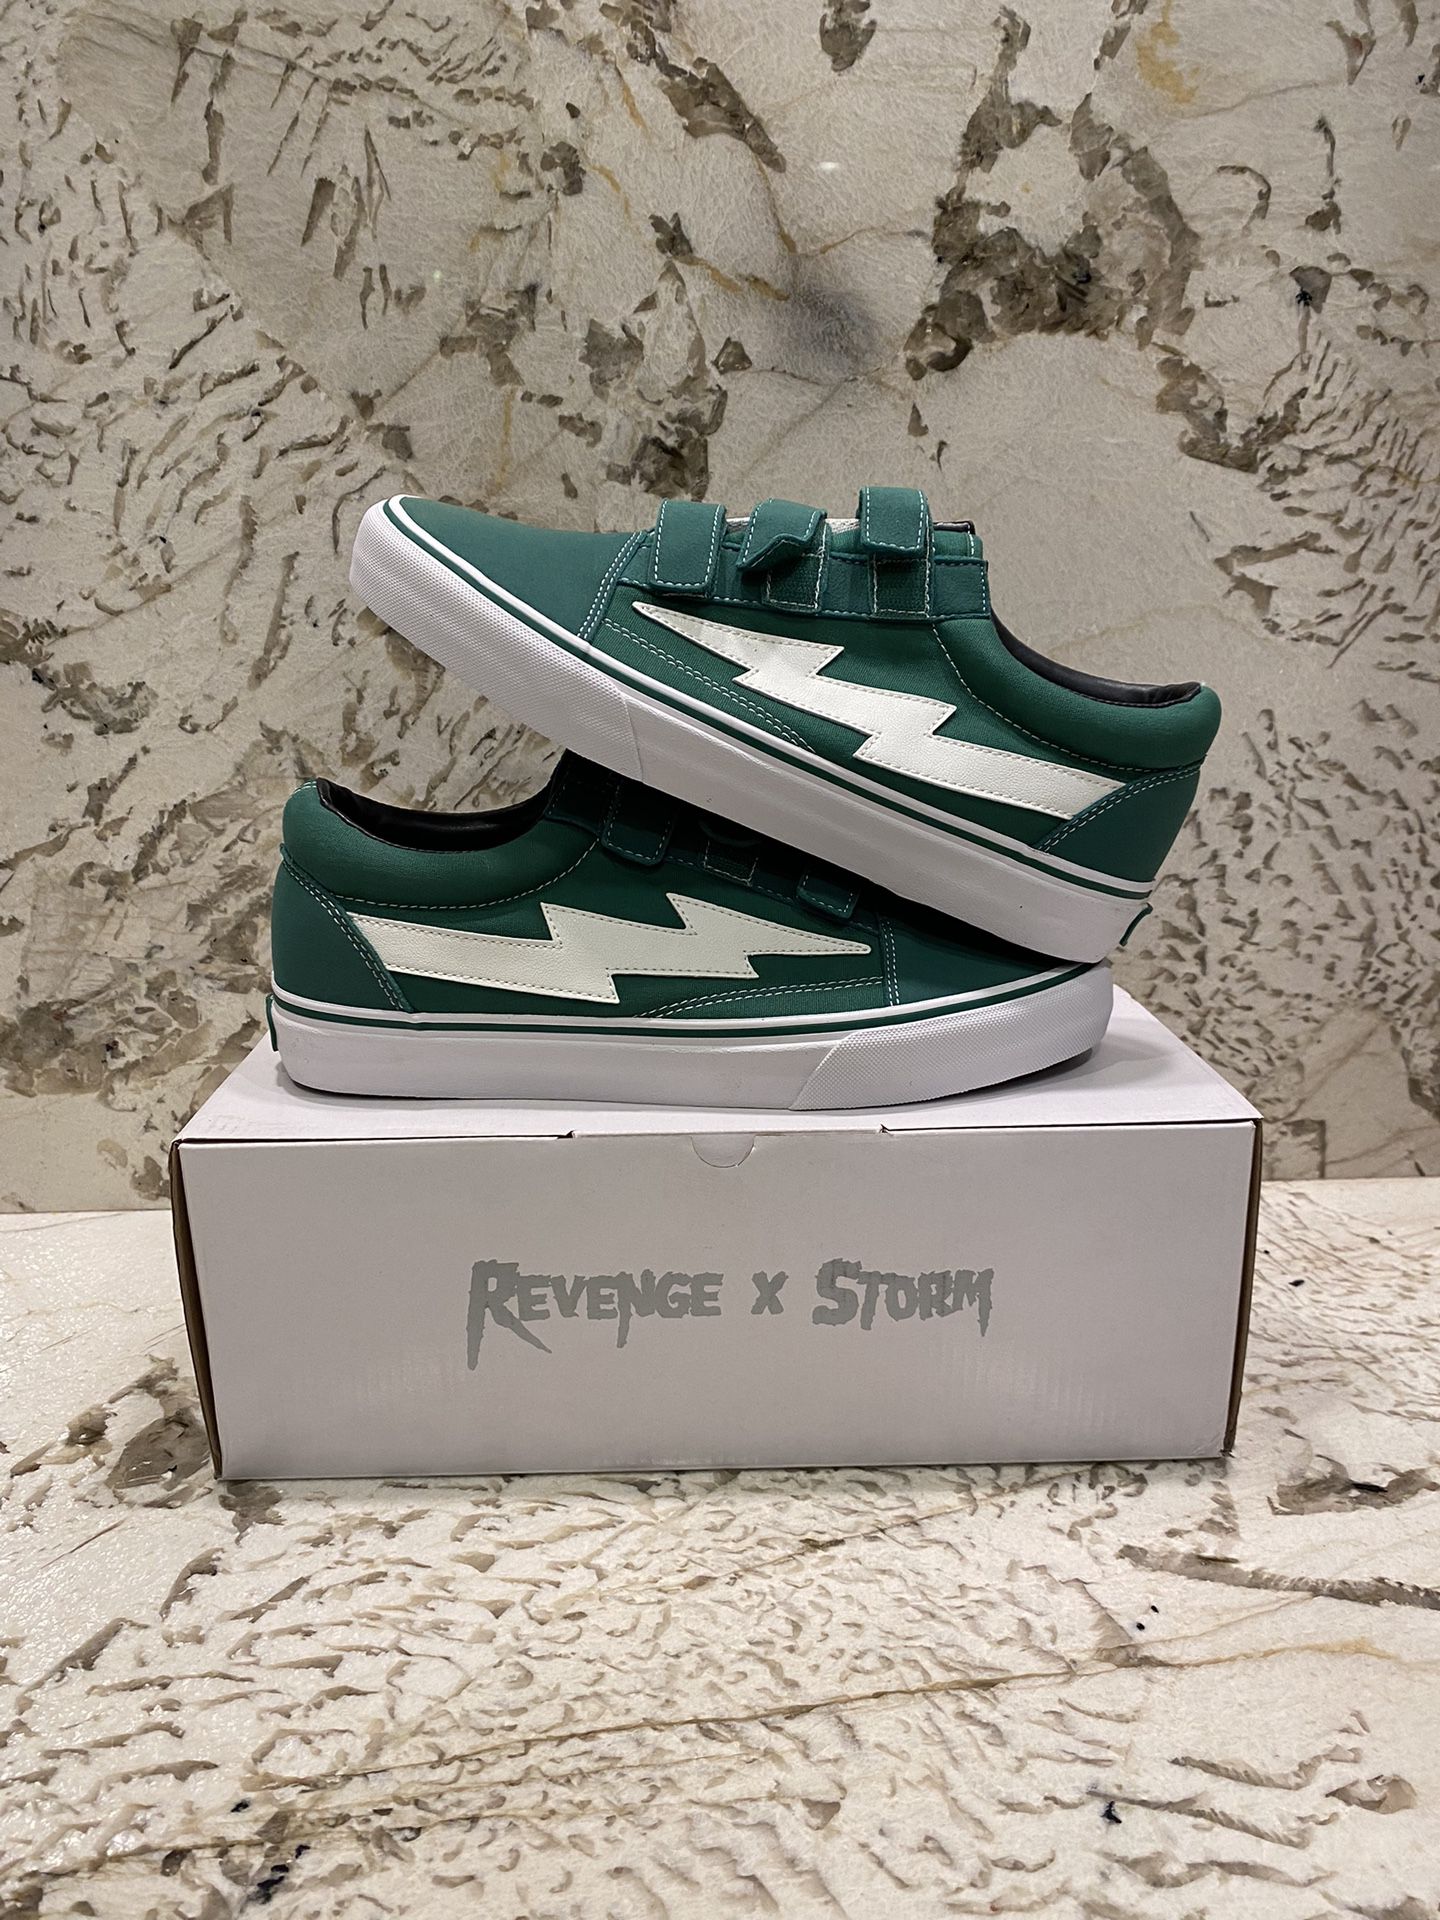 Revenge x Storm Green Straps Multiple Sizes Brand New Authentic